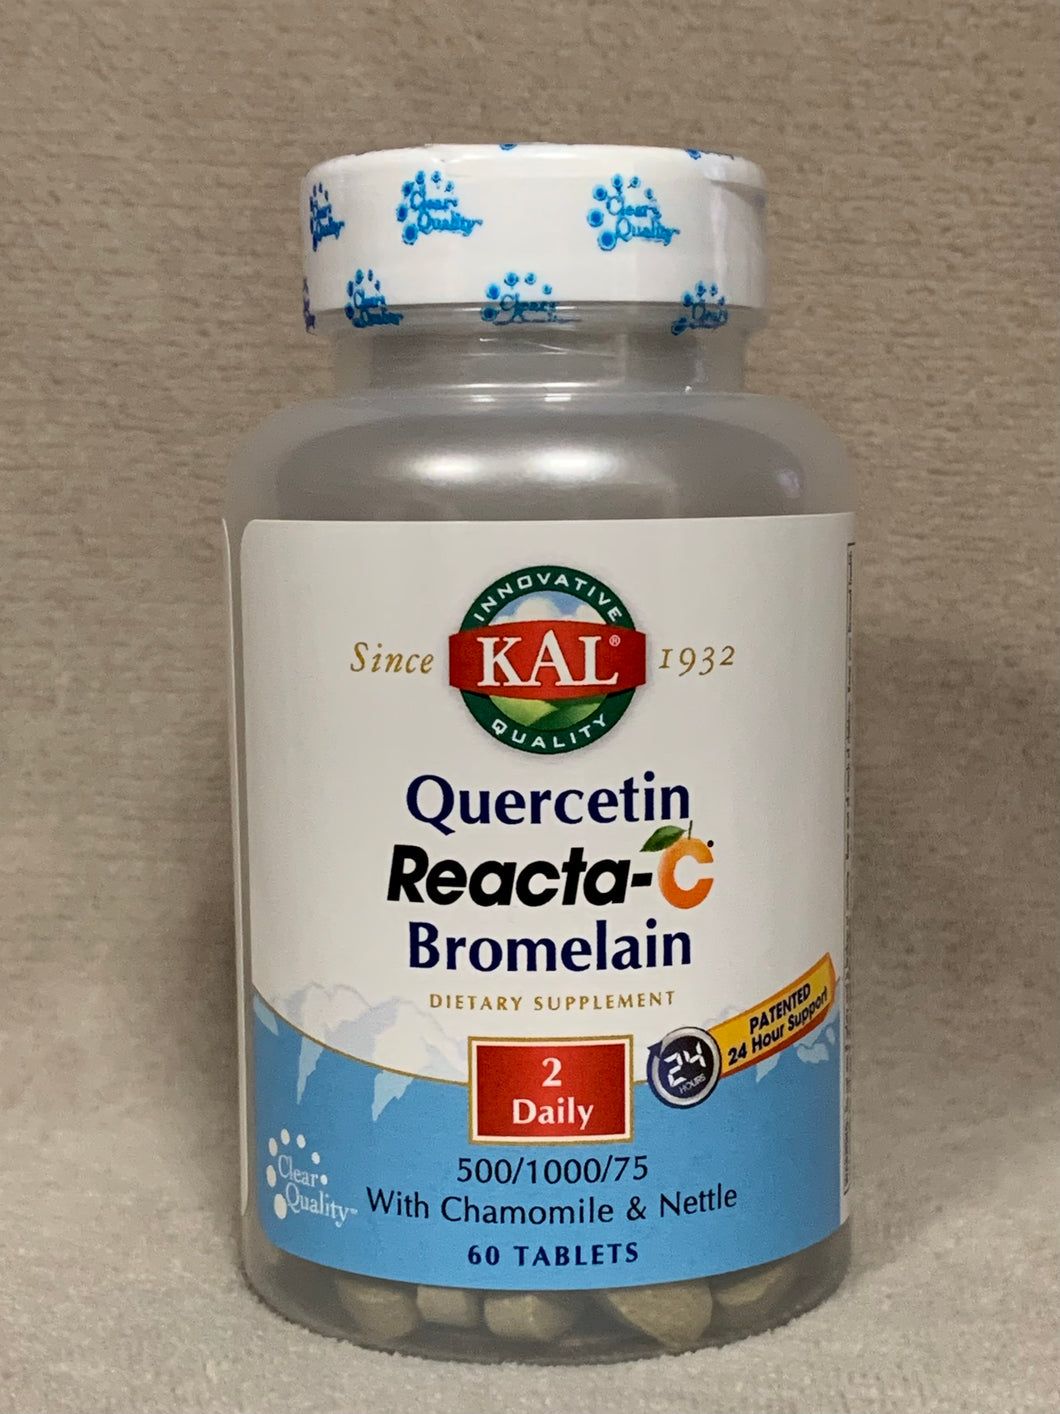 KAL Quercetin Reacta-C Bromelain 60 tablets